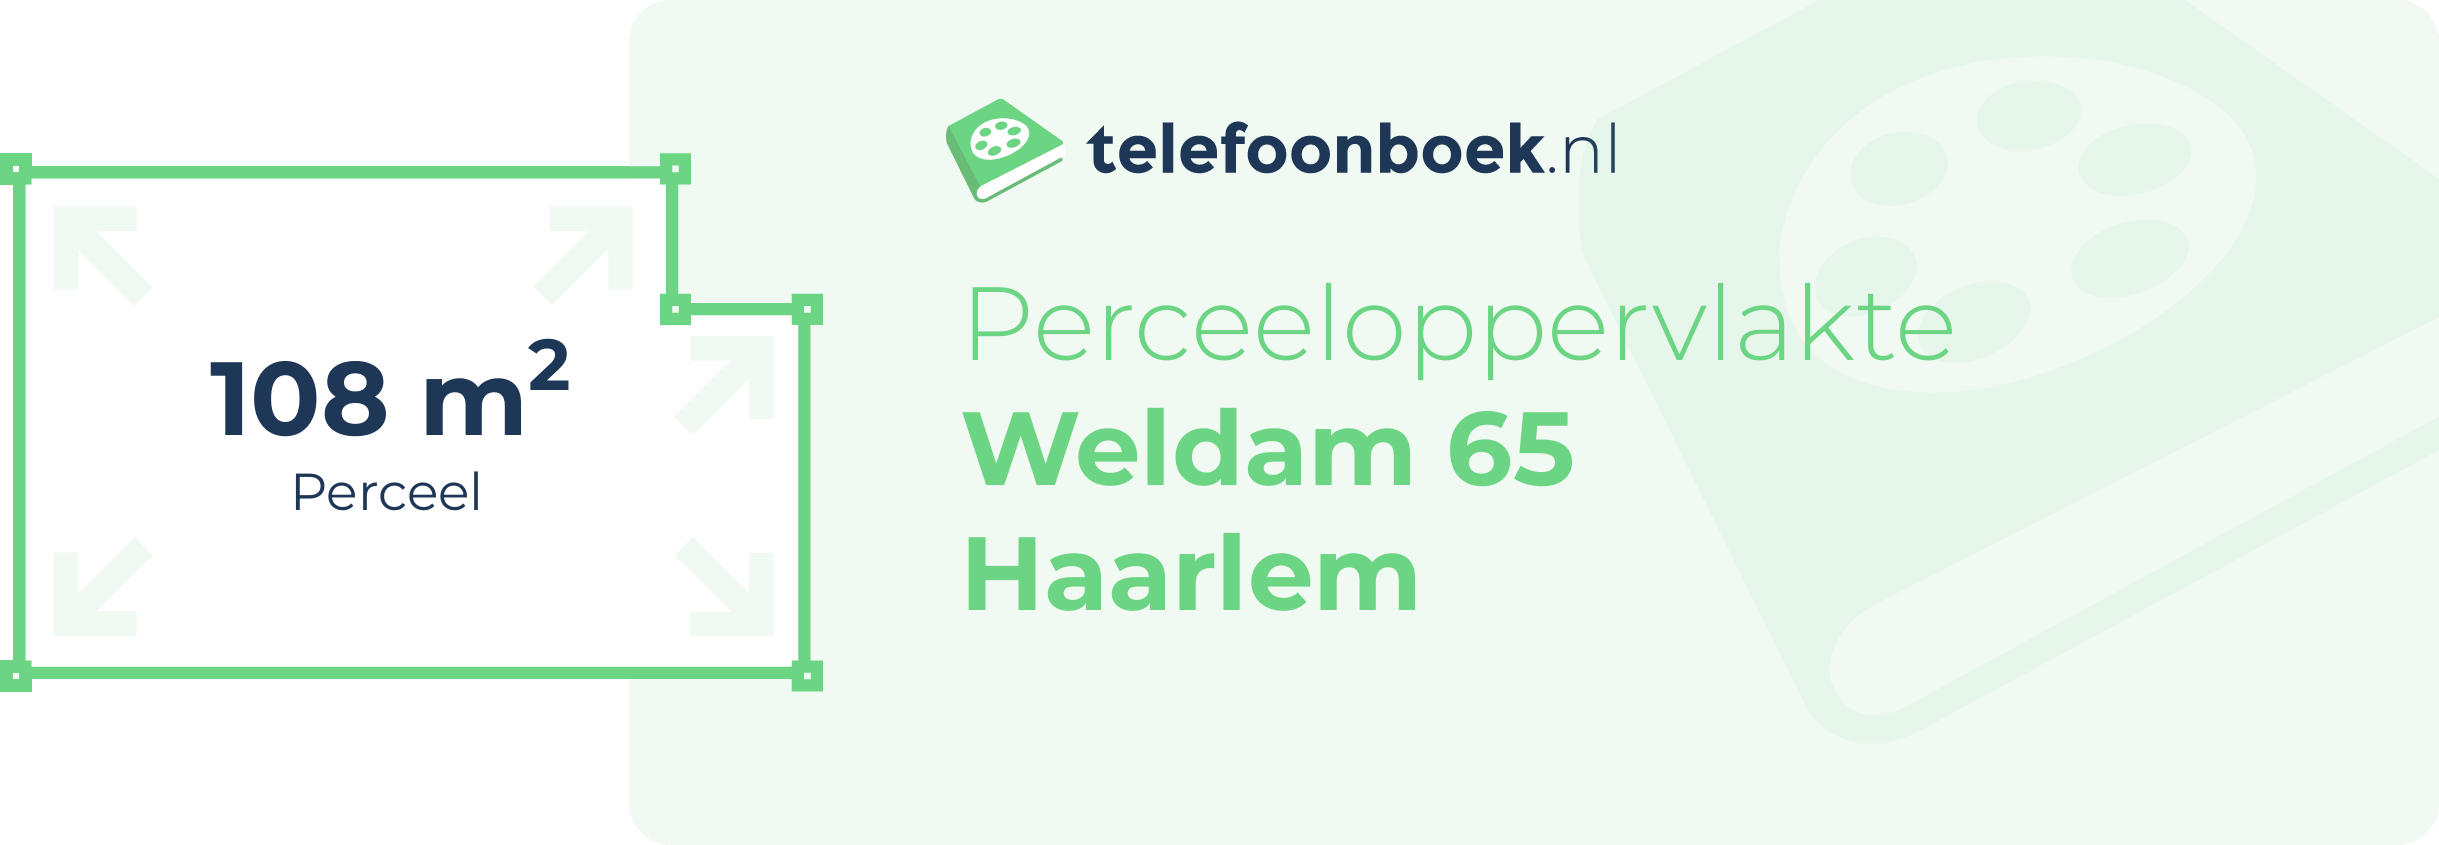 Perceeloppervlakte Weldam 65 Haarlem